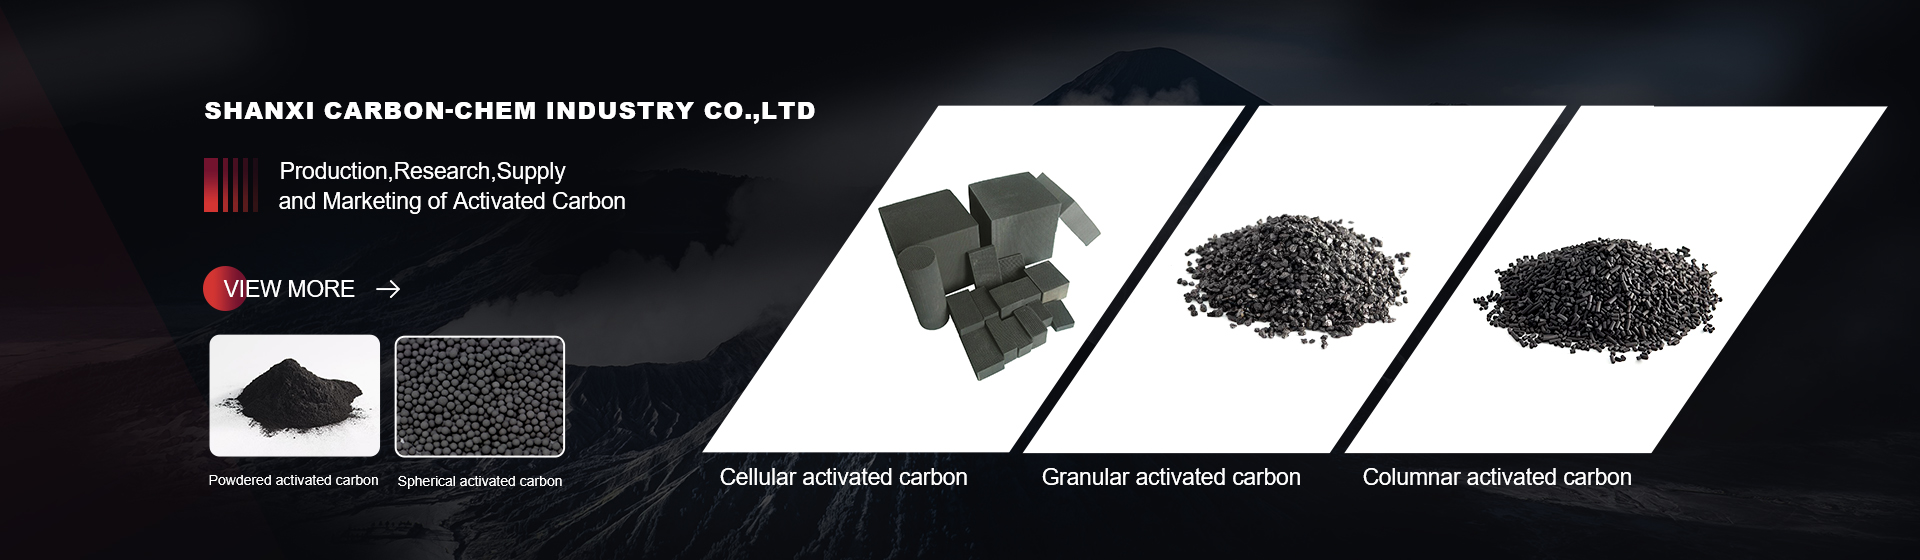 Shanxi Carbon-Chem Industry Co.,Ltd